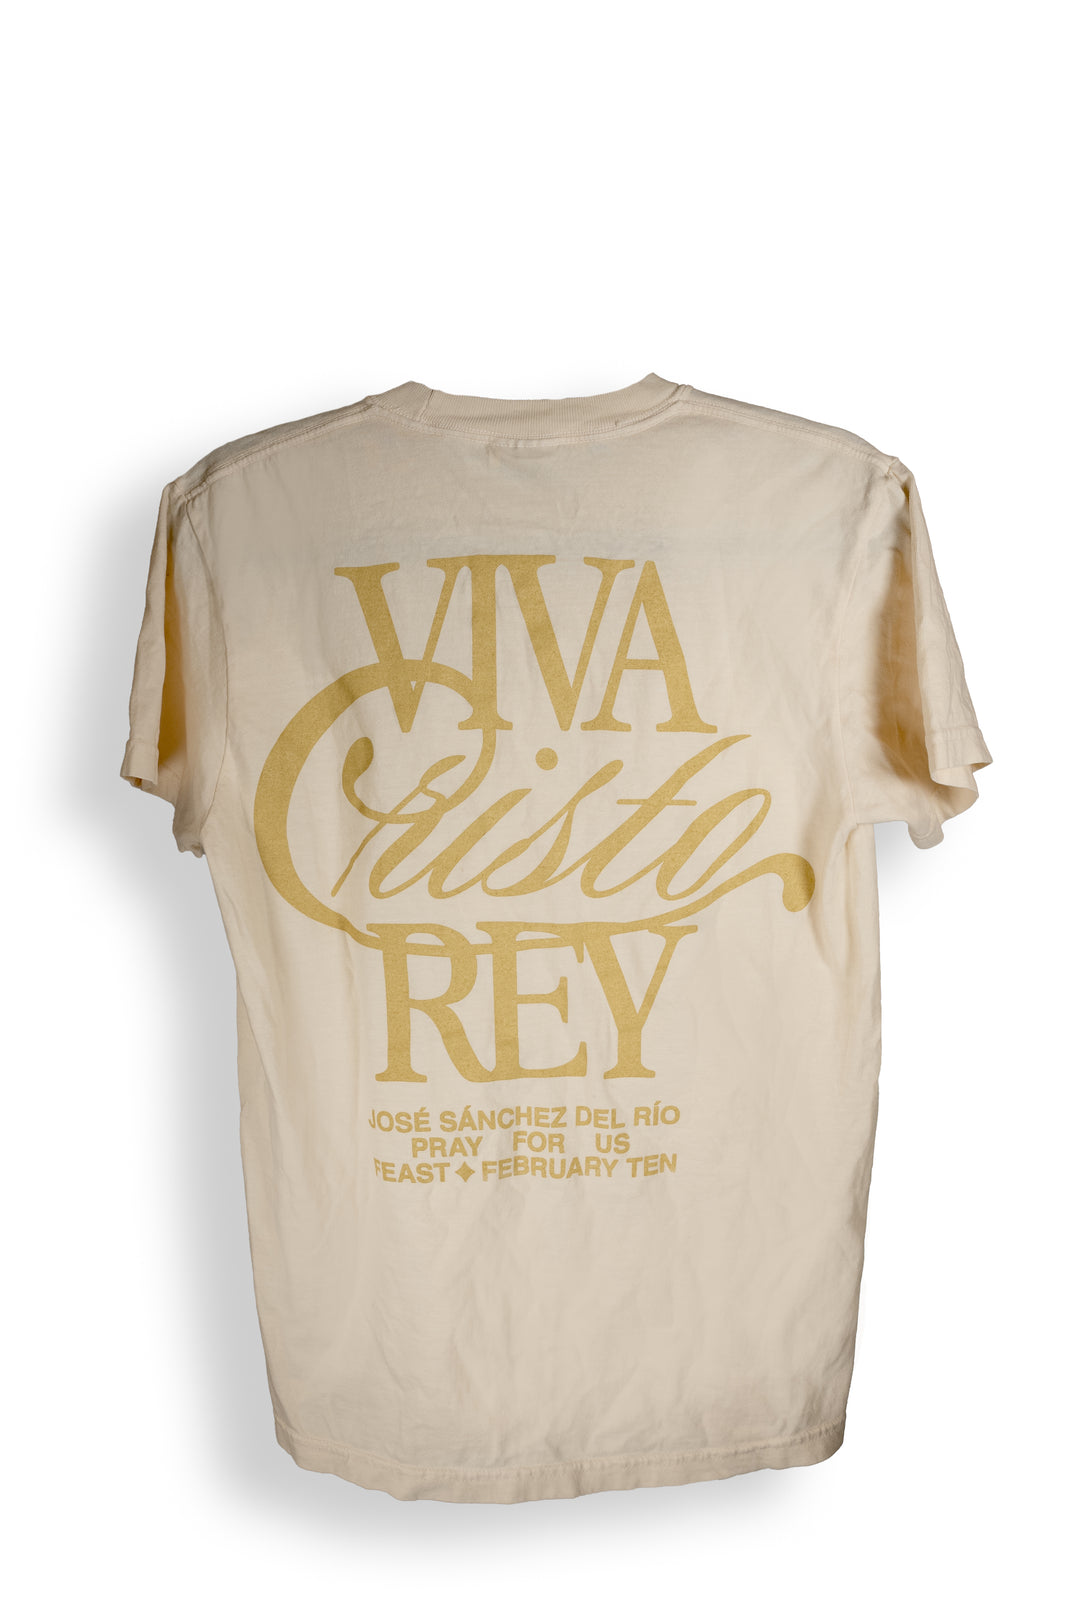 Viva Cristo Rey SEEK24 T Shirt - Sandstone